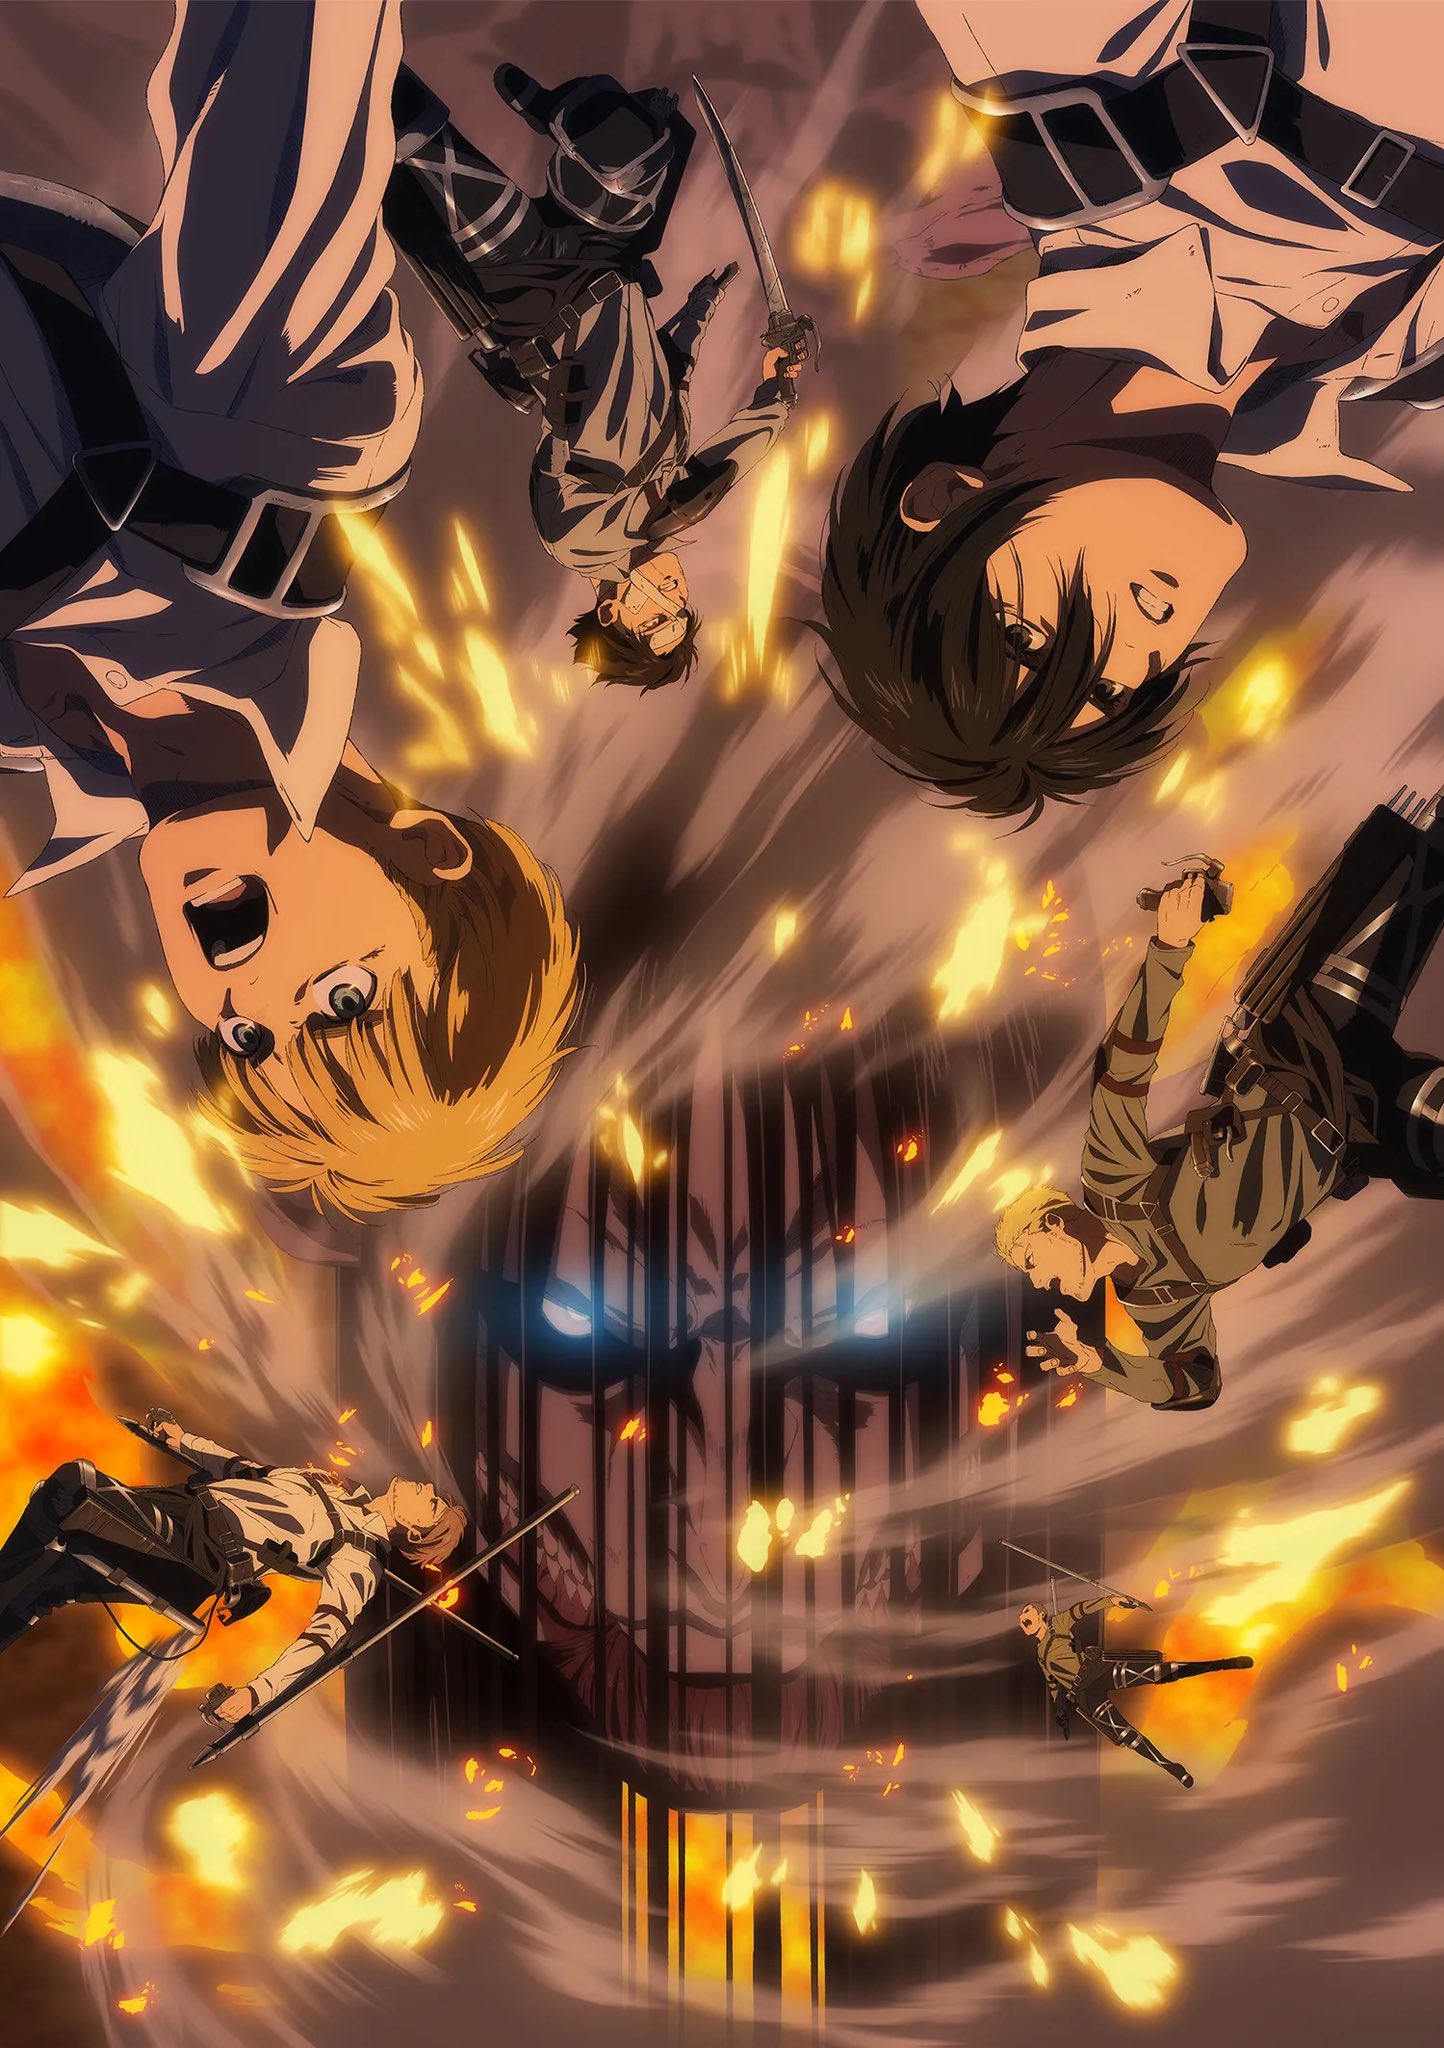 Attack on Titan Wiki on Twitter  Attack on titan, Movie artwork, Anime